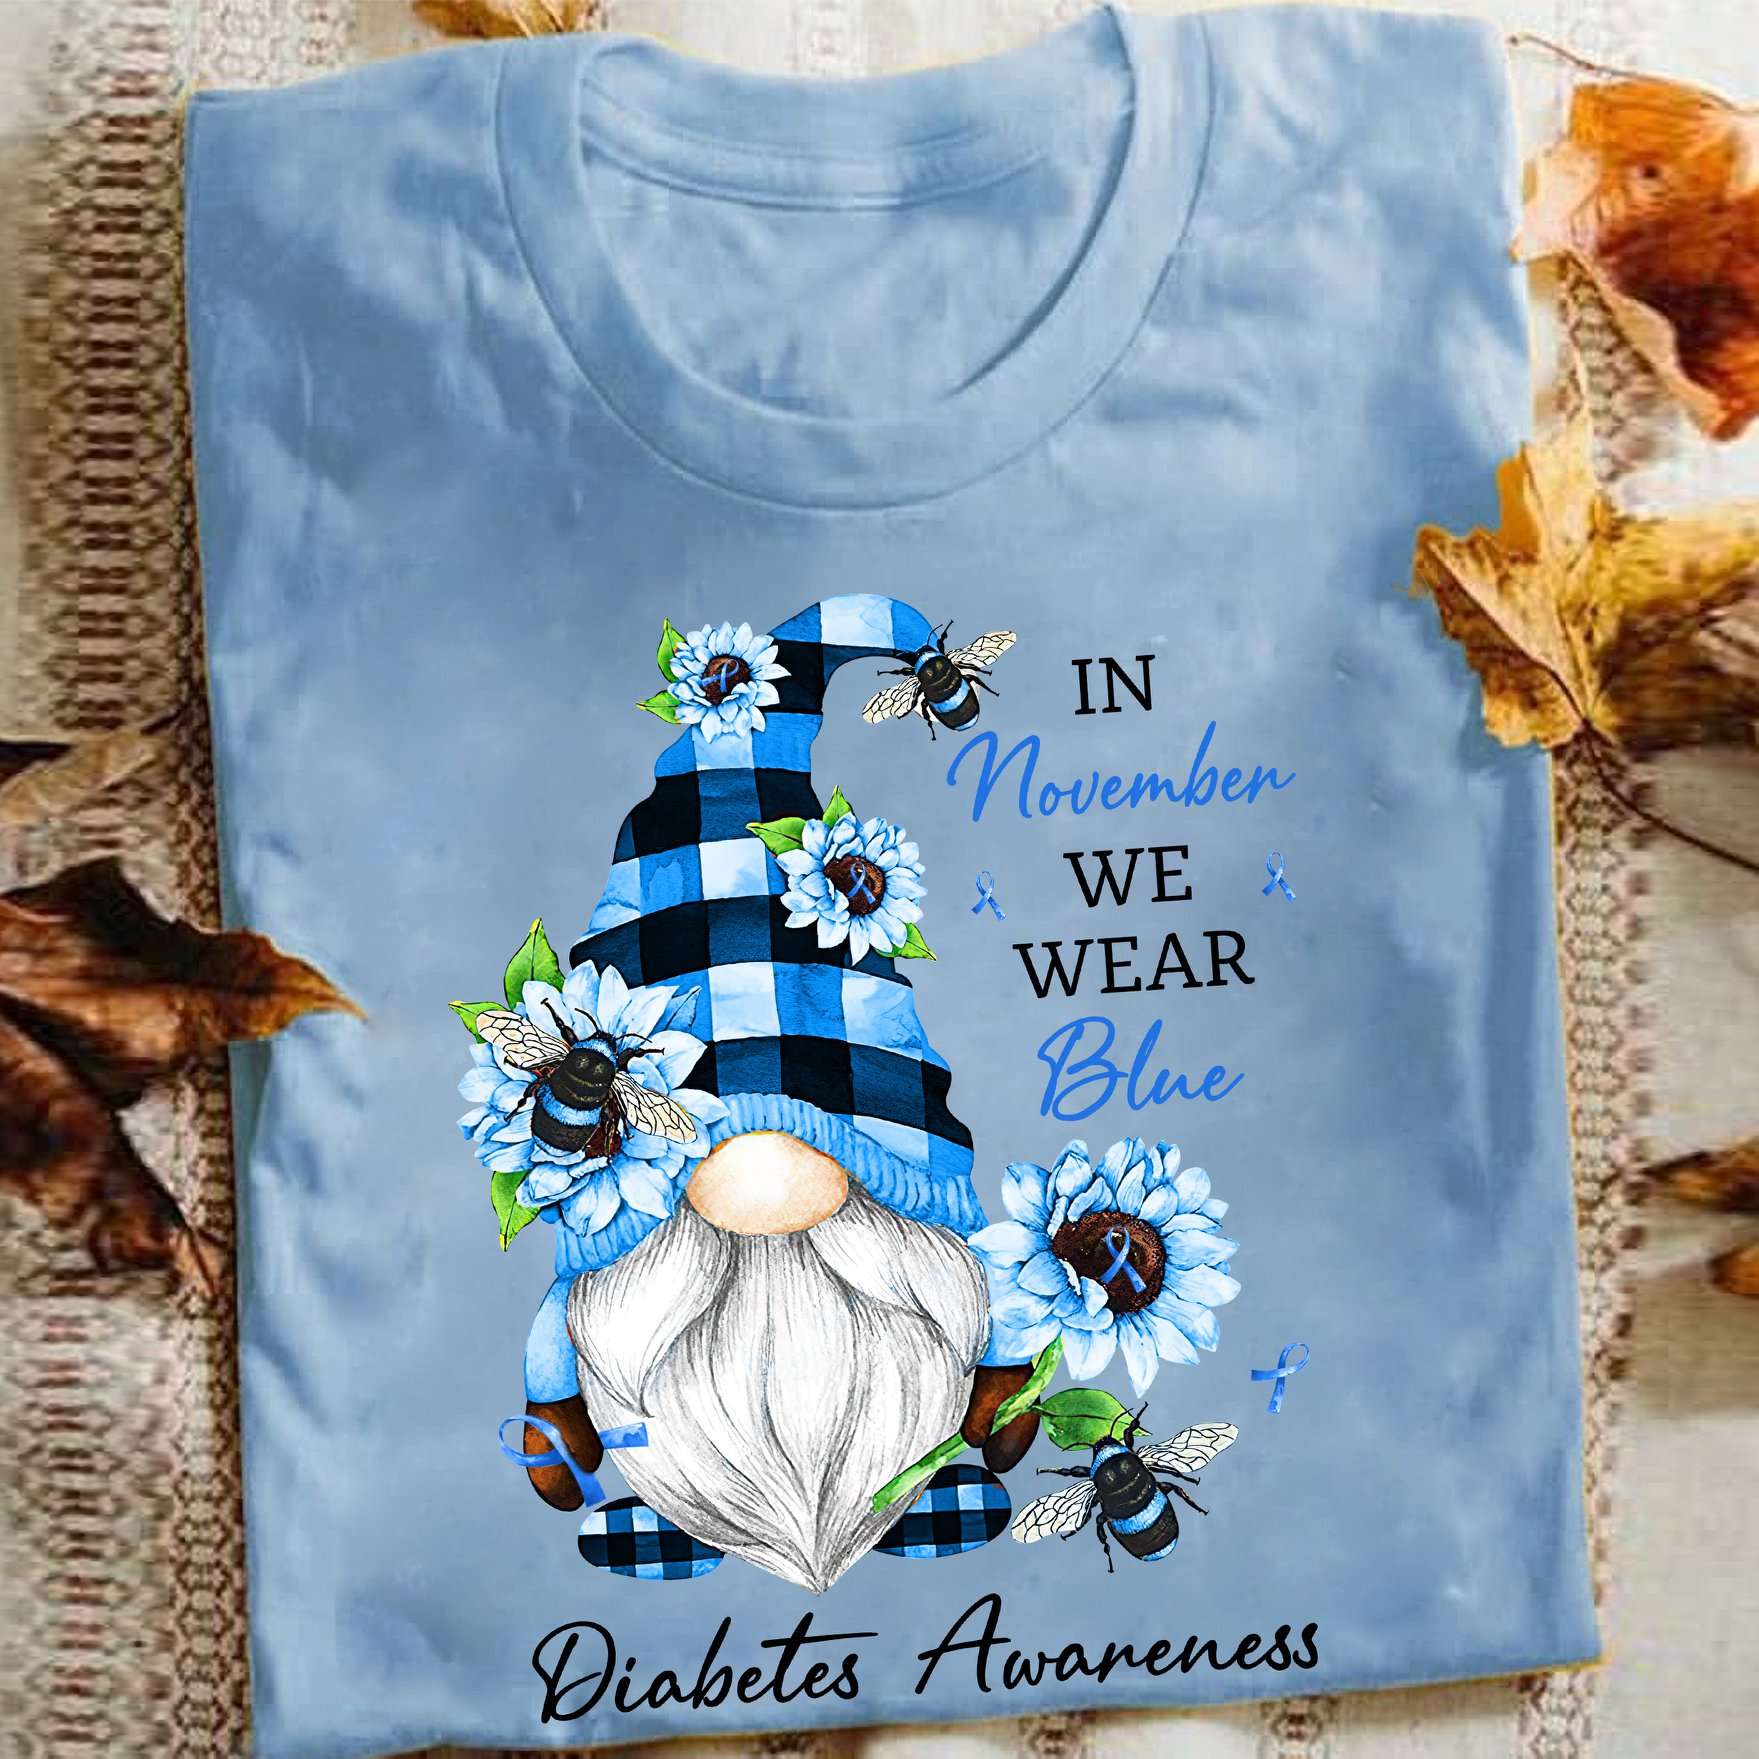 In November we wear blue - Diabetes awareness, diabetes awareness month, garden gnome diabetes